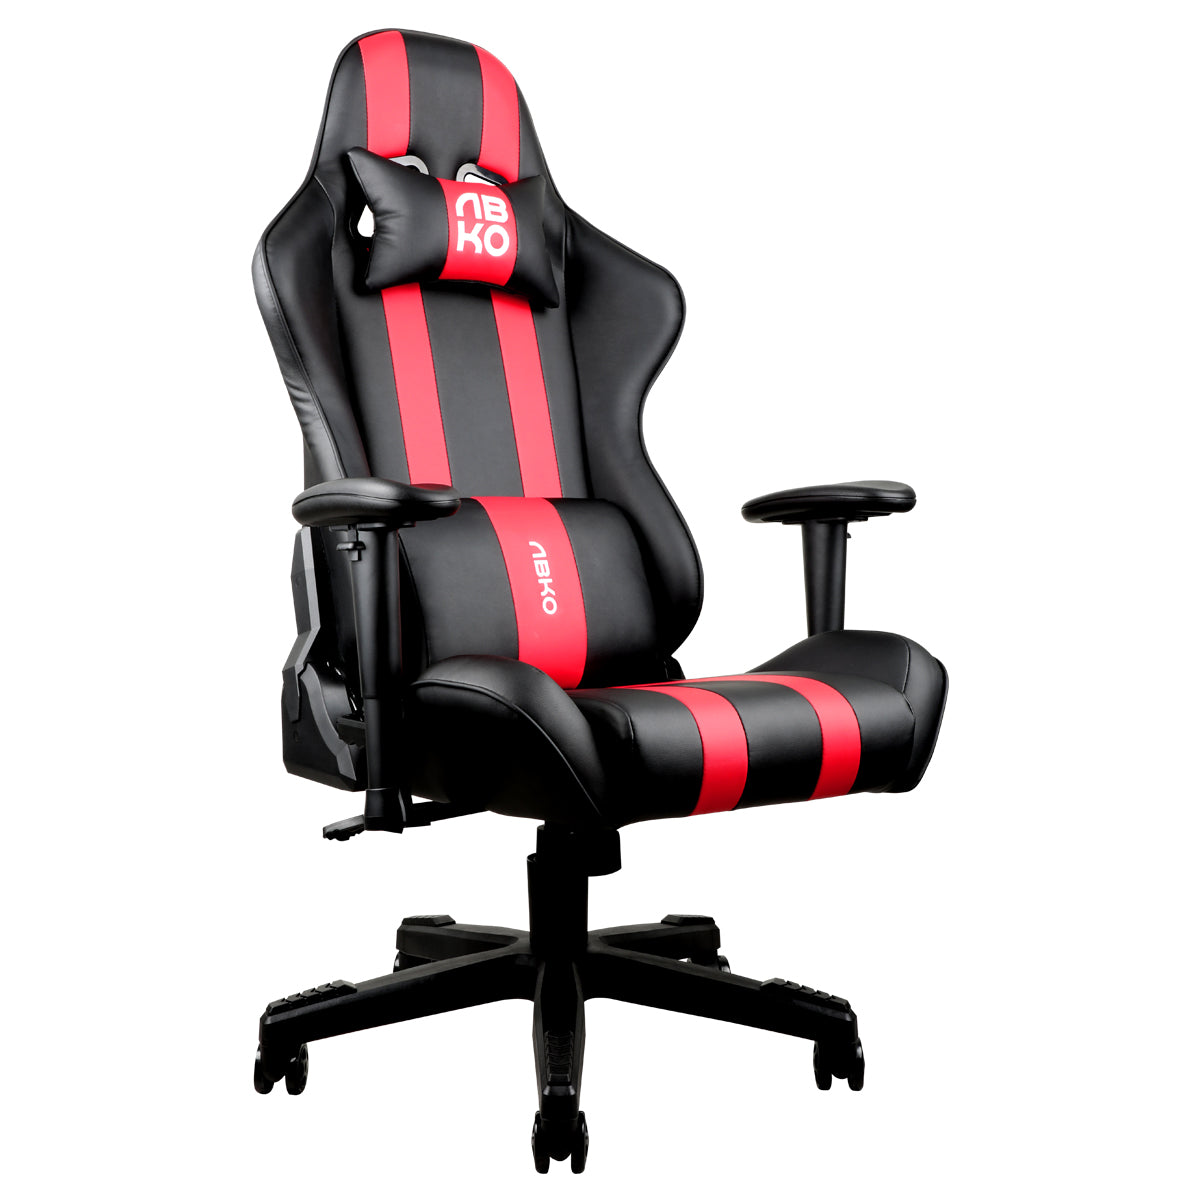 ABKO AGC15 韓國 Gaming Chair 電競椅 遊戲扶手椅 高背椅 Armchair 辨公室座椅 大班椅